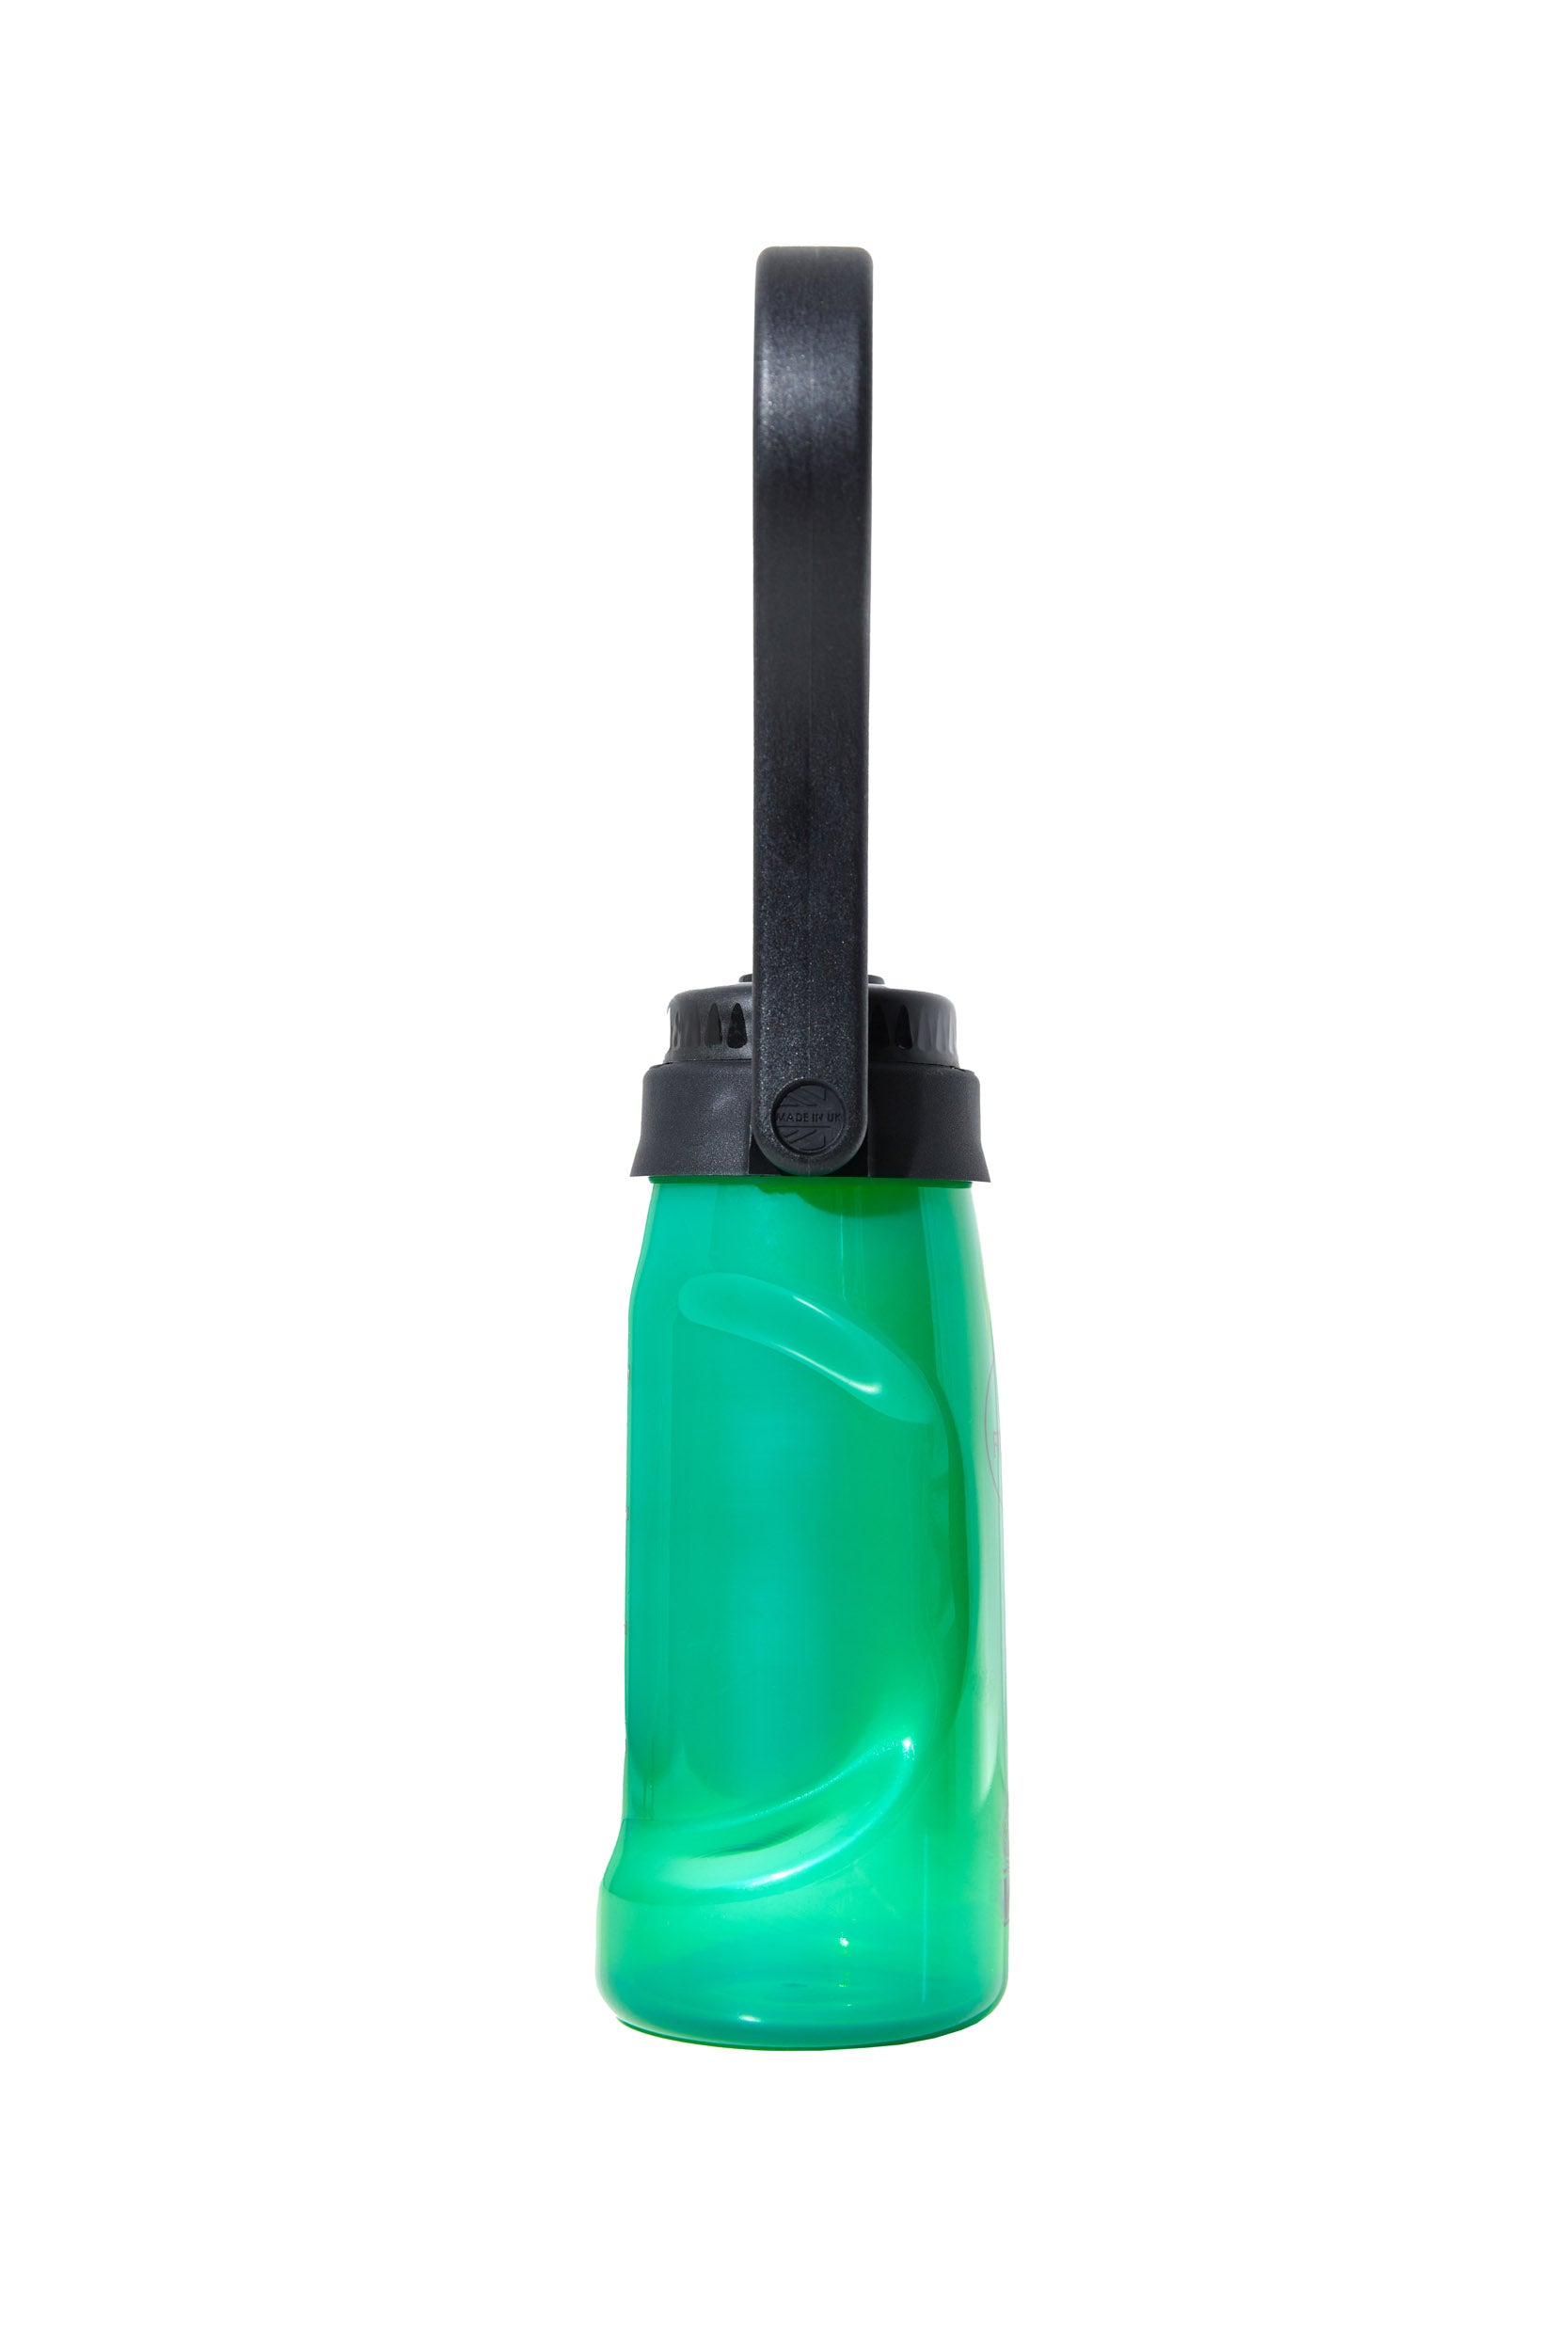 WBC X Fraqua Bottle in Green - Fraqua®